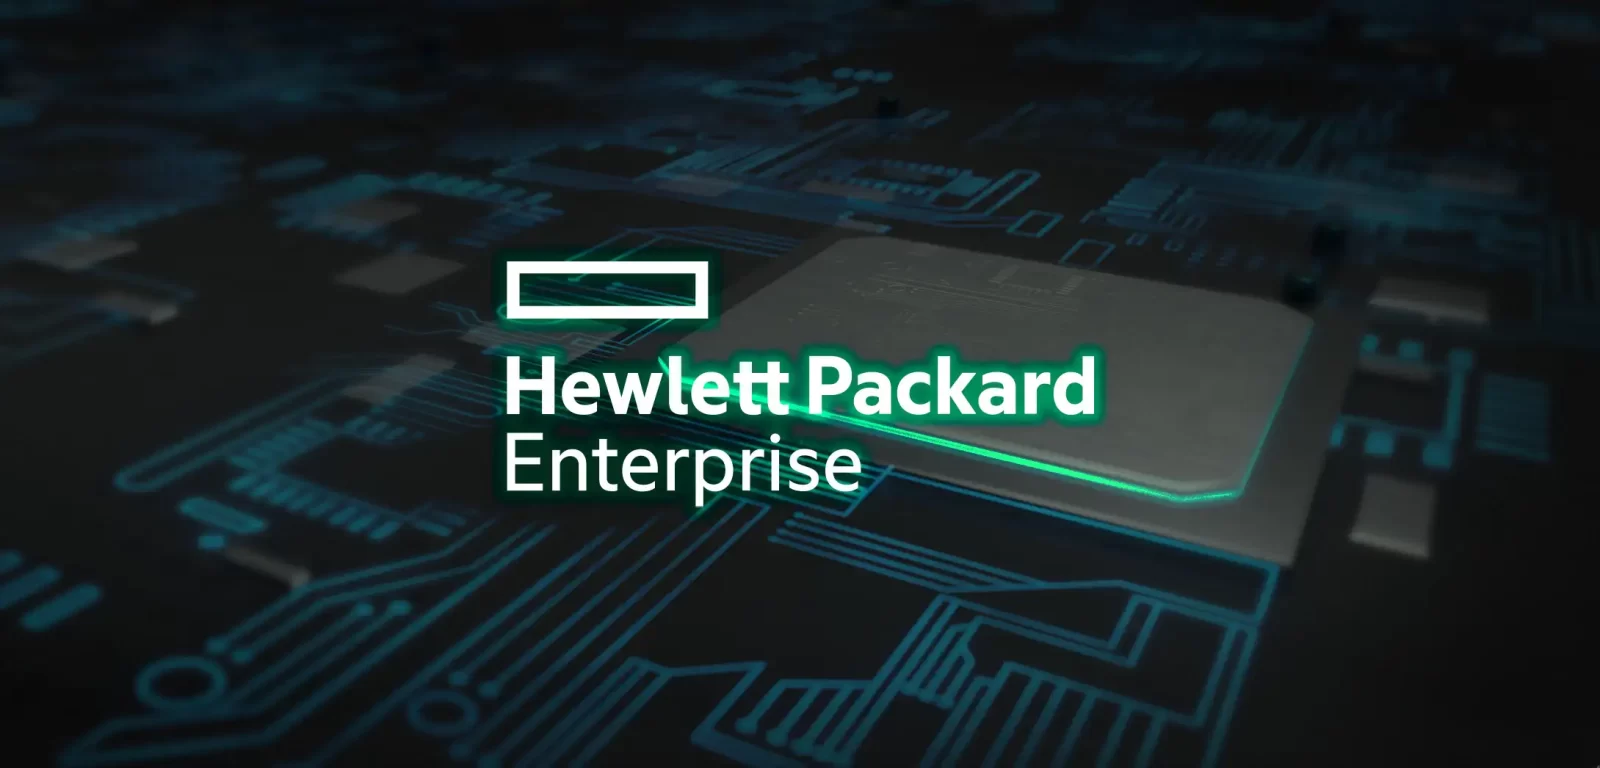 HPE - hewlett packard enterprise - هیولت پاکارد انترپرایز